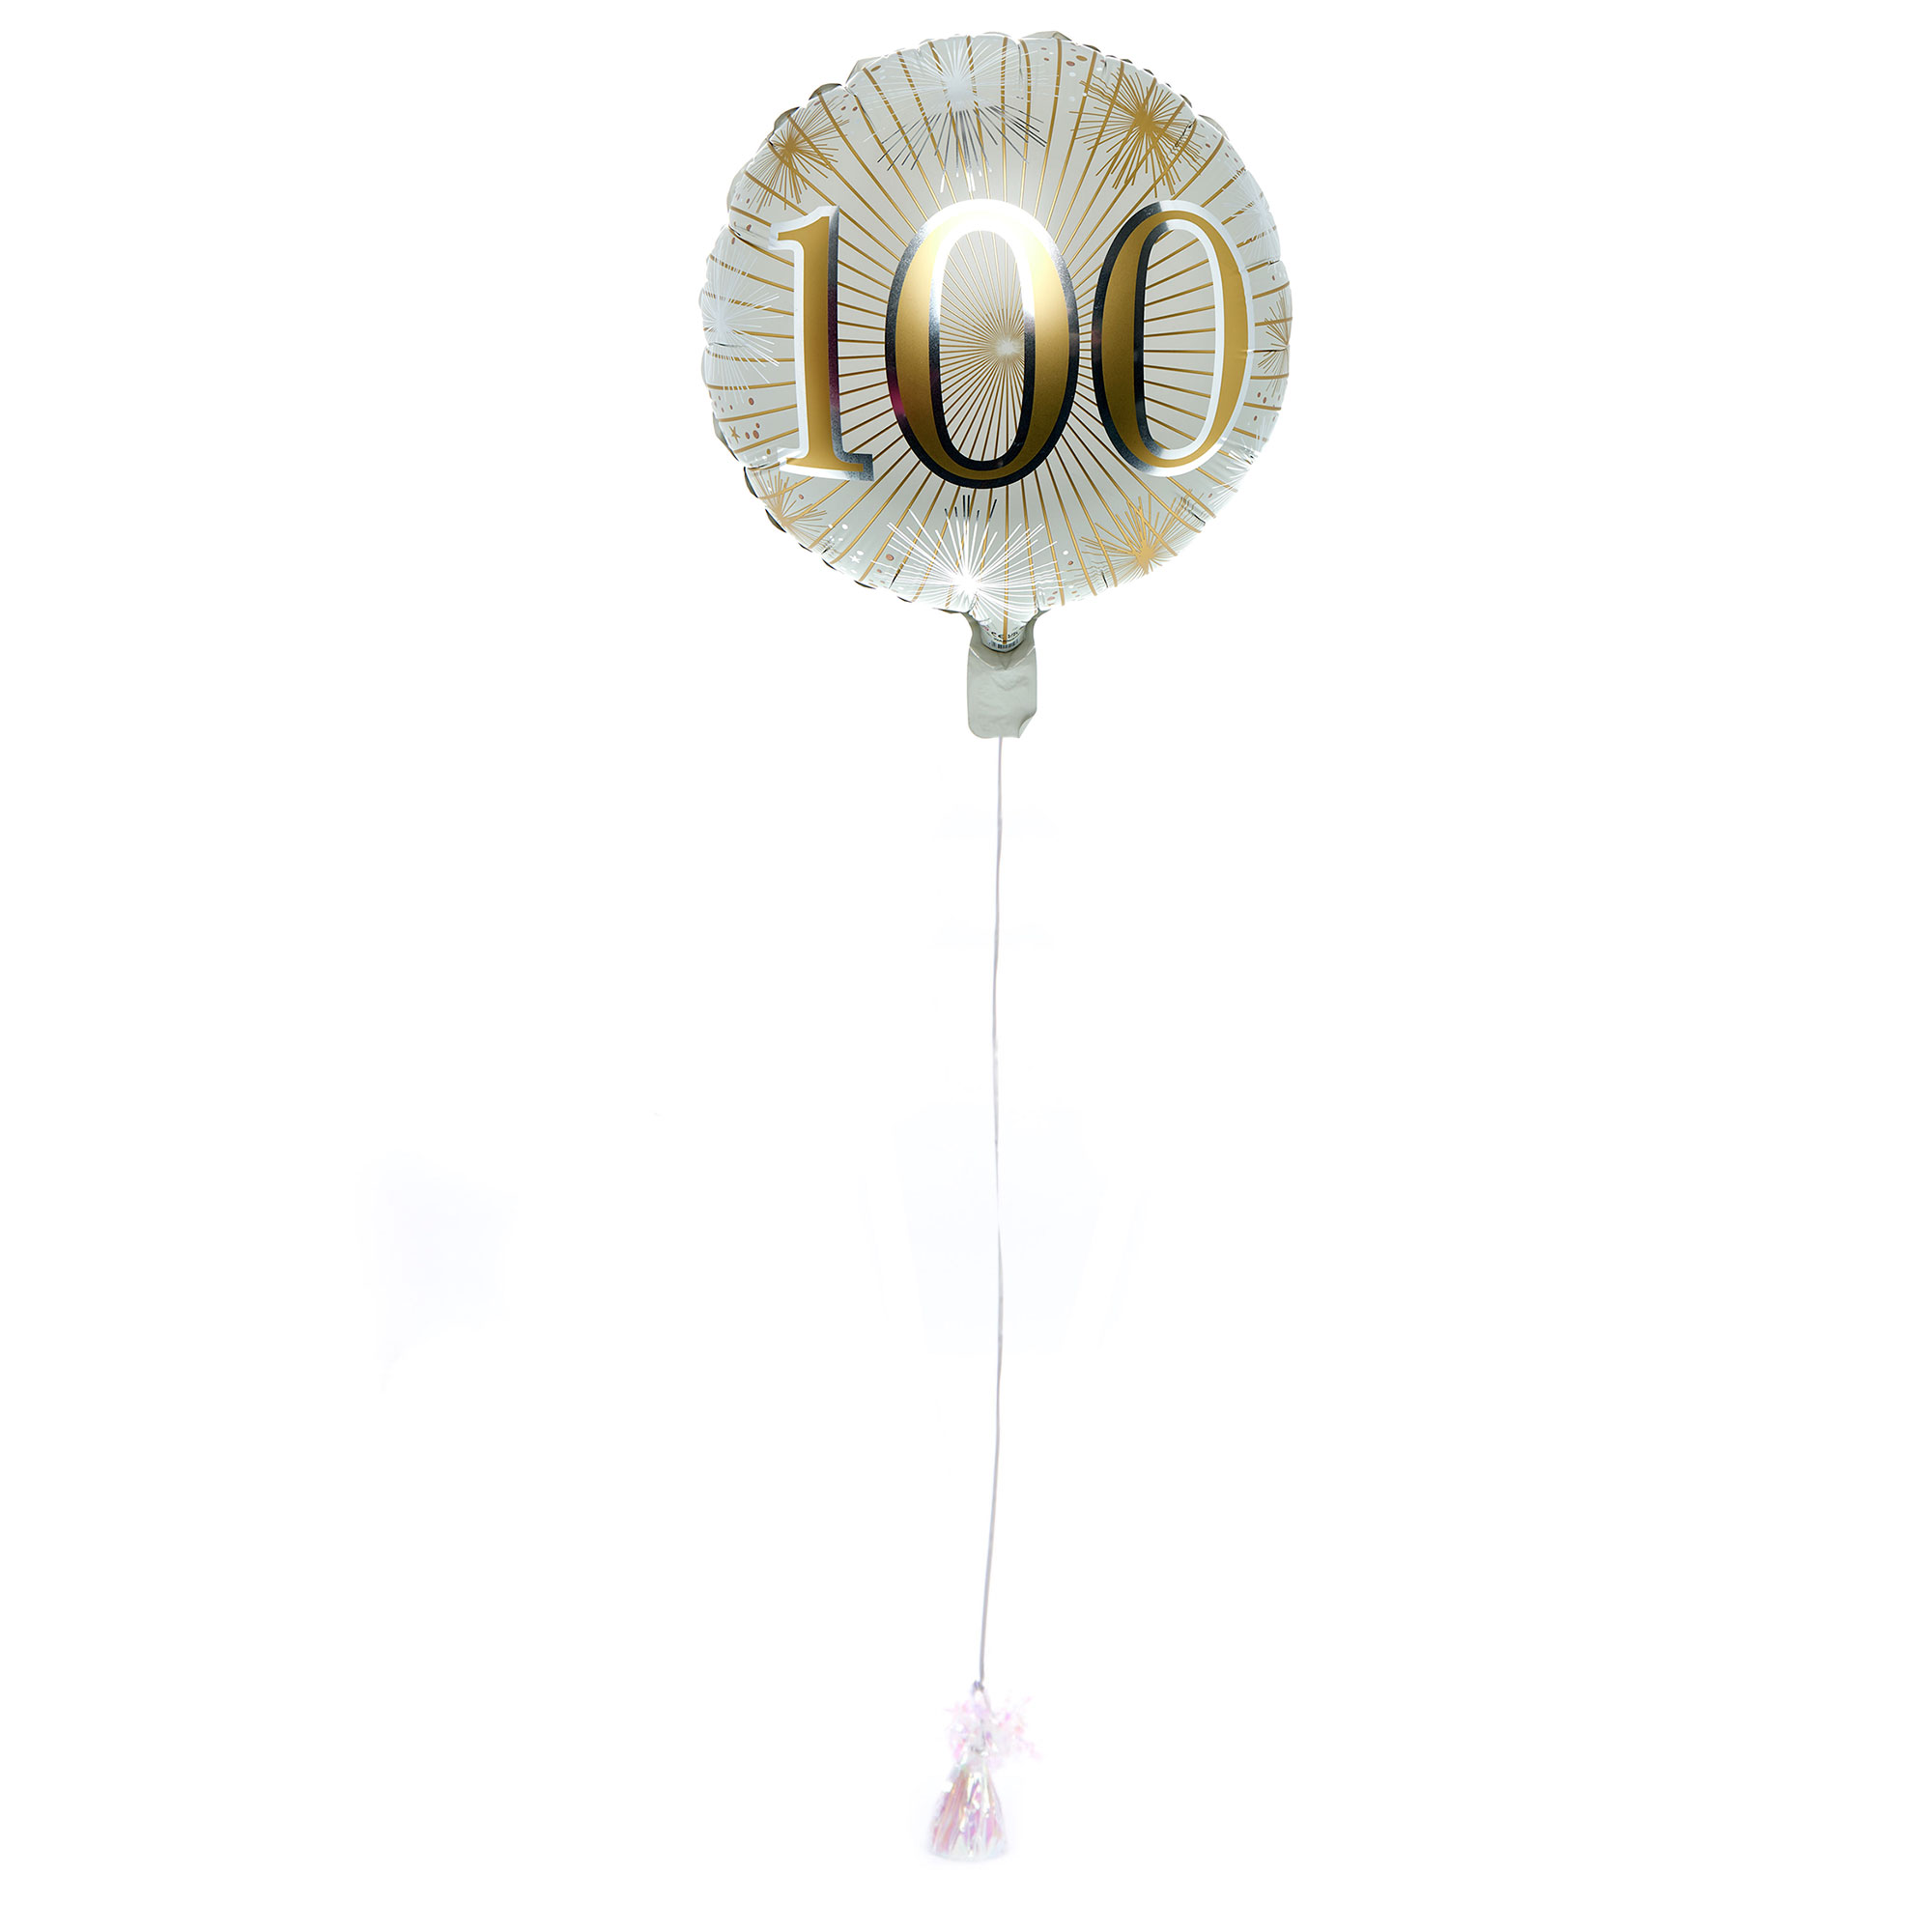 100th Birthday Balloon & Lindt Chocolate Box - FREE GIFT CARD!